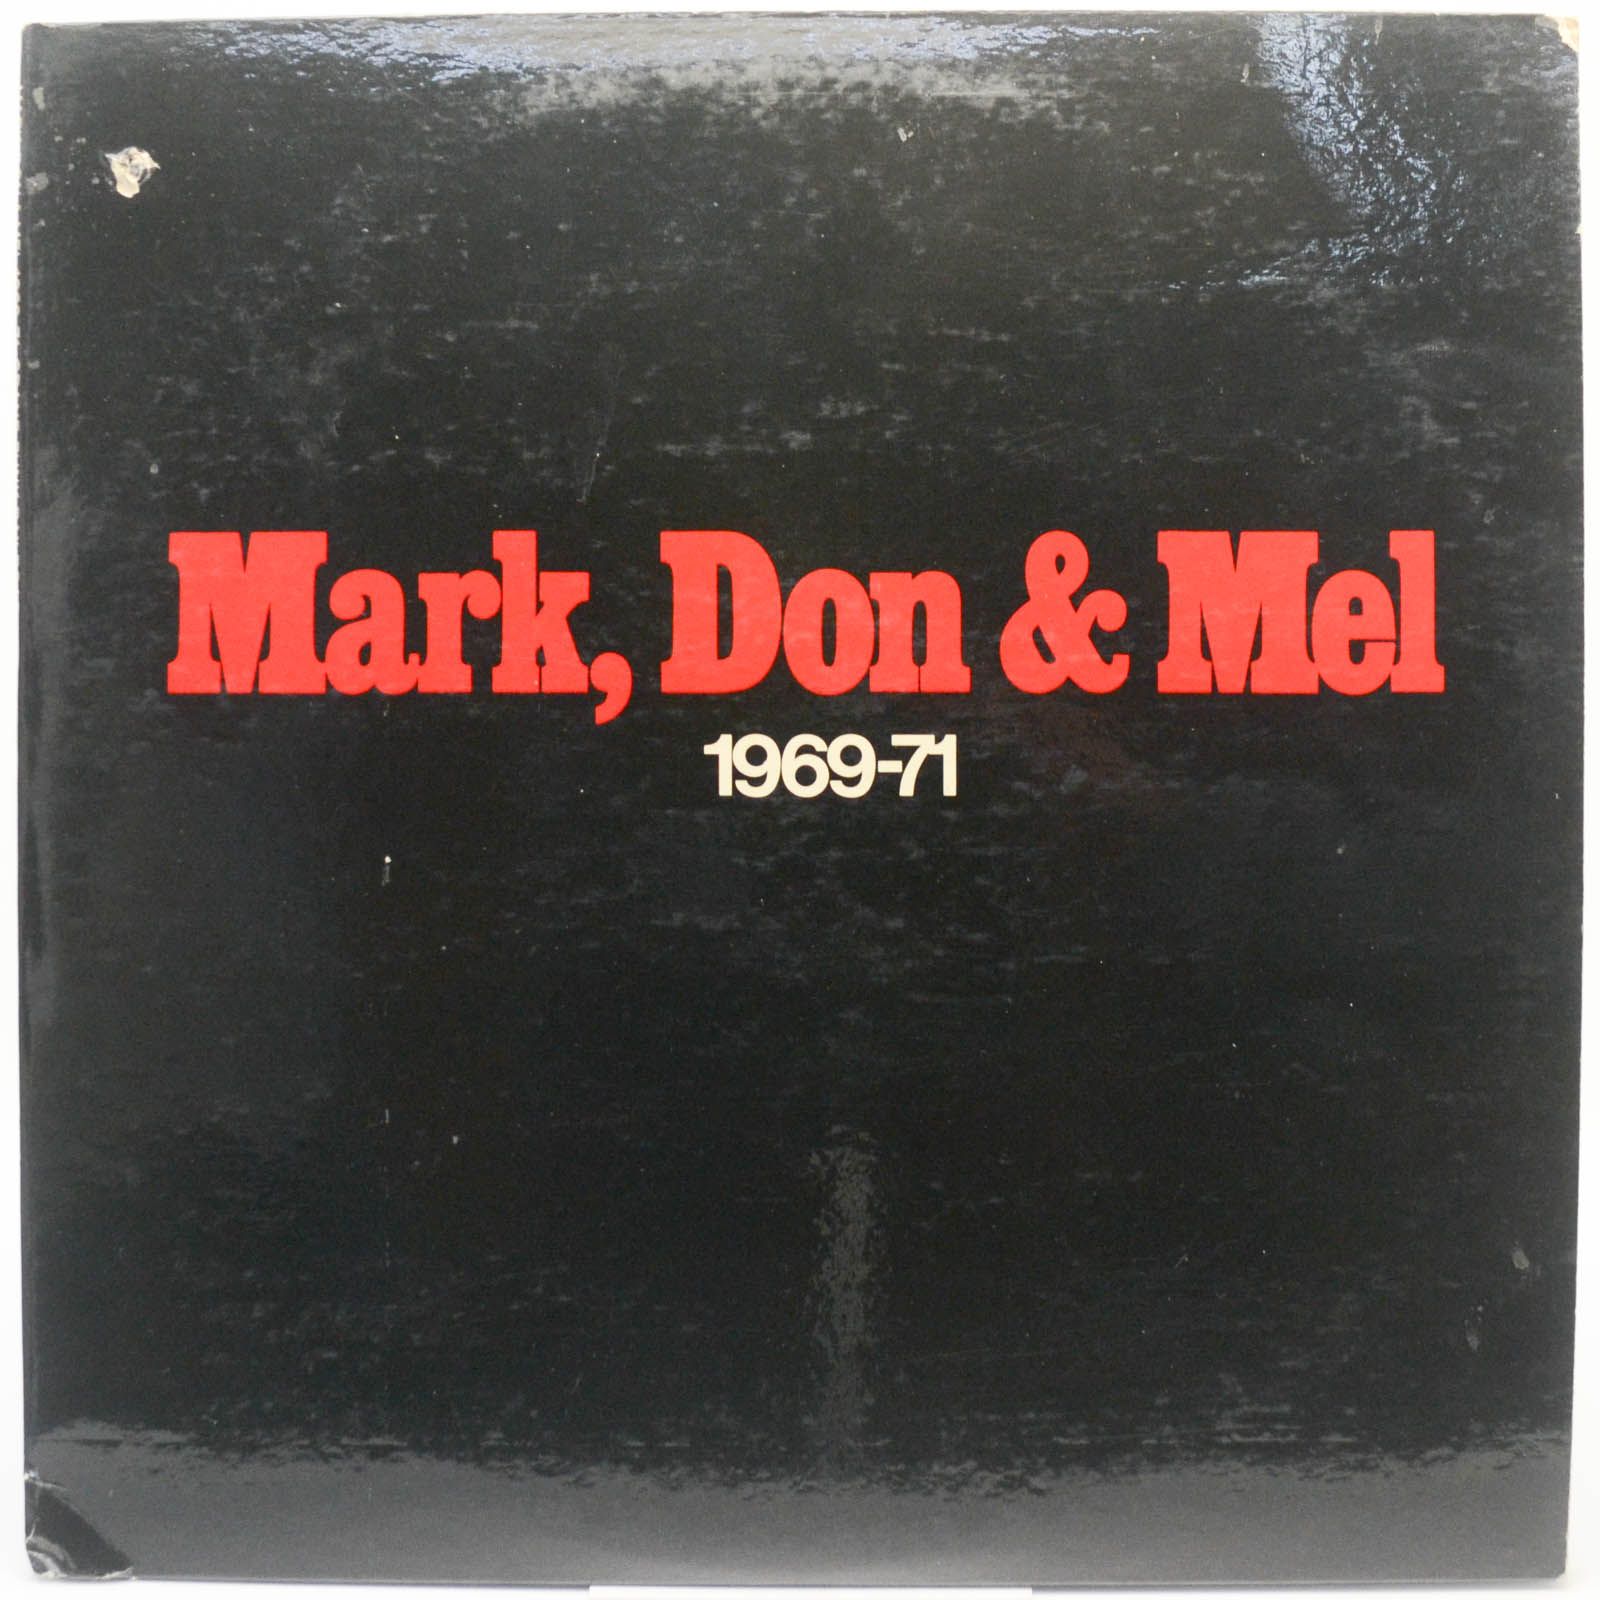 Grand Funk Railroad — Mark, Don & Mel 1969-71 (2LP, USA), 1972